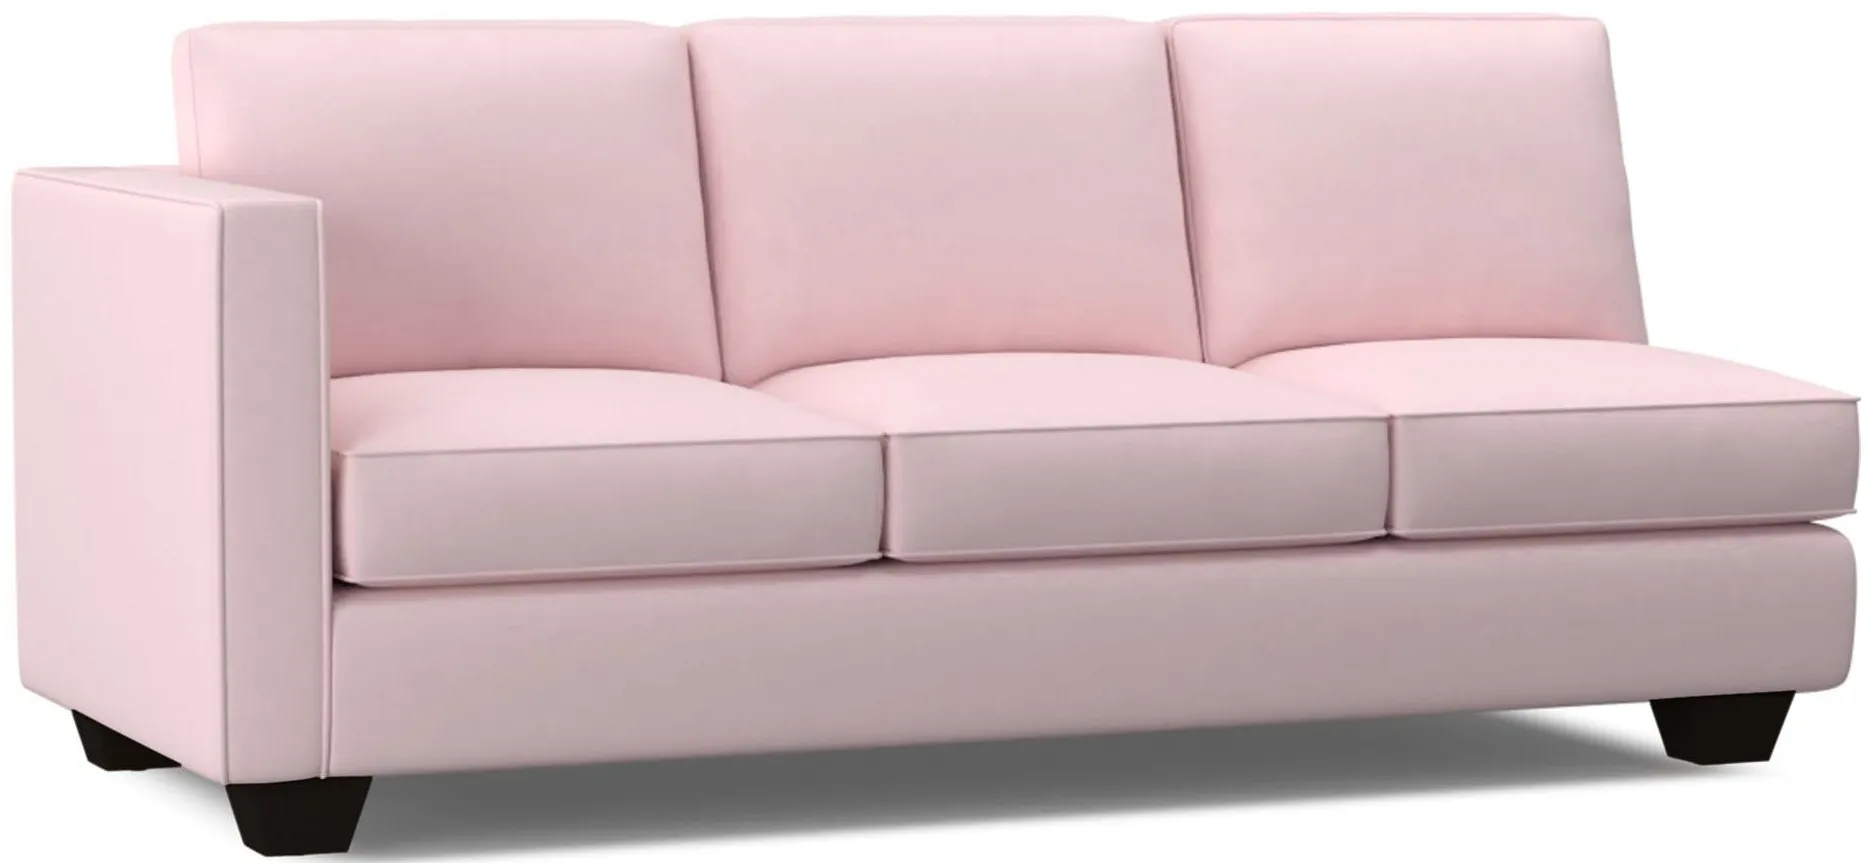 Catalina Left Arm Sofa